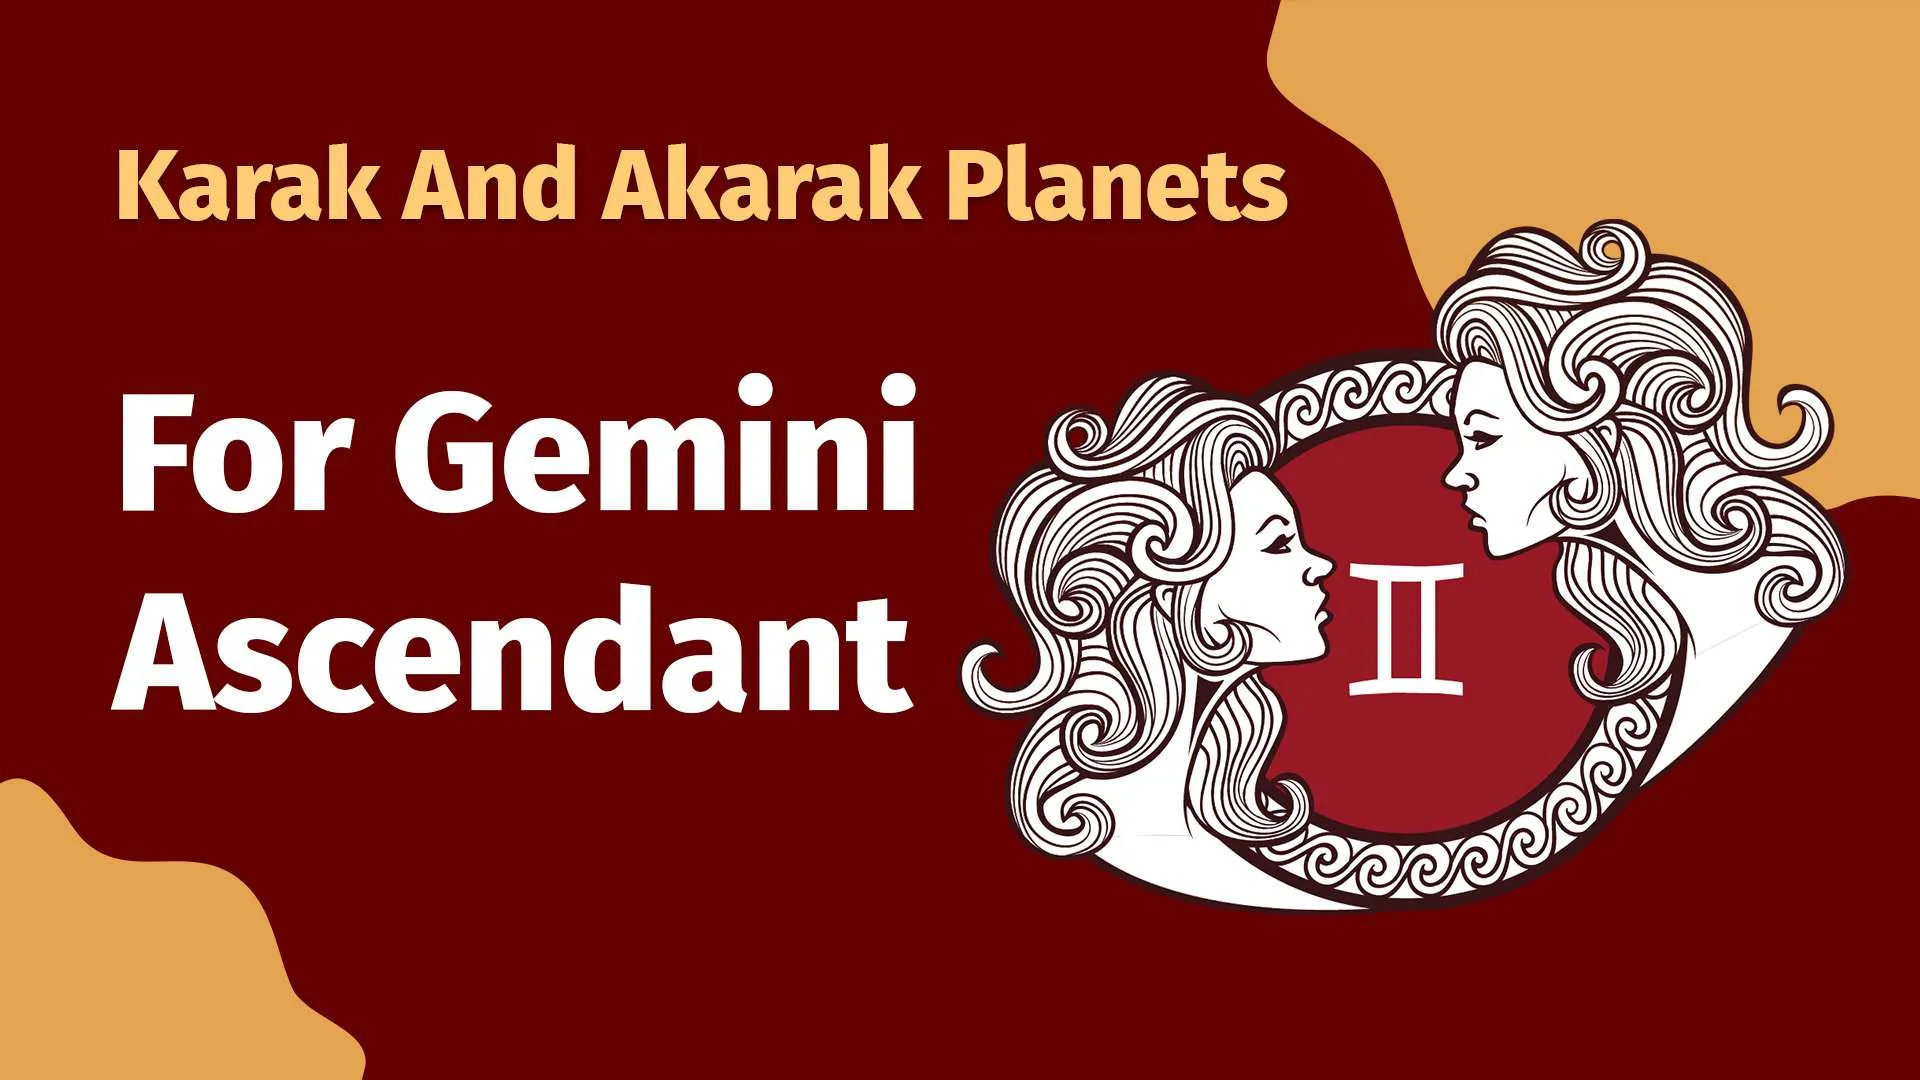 Karak and Akarak planets of Gemini Ascendants